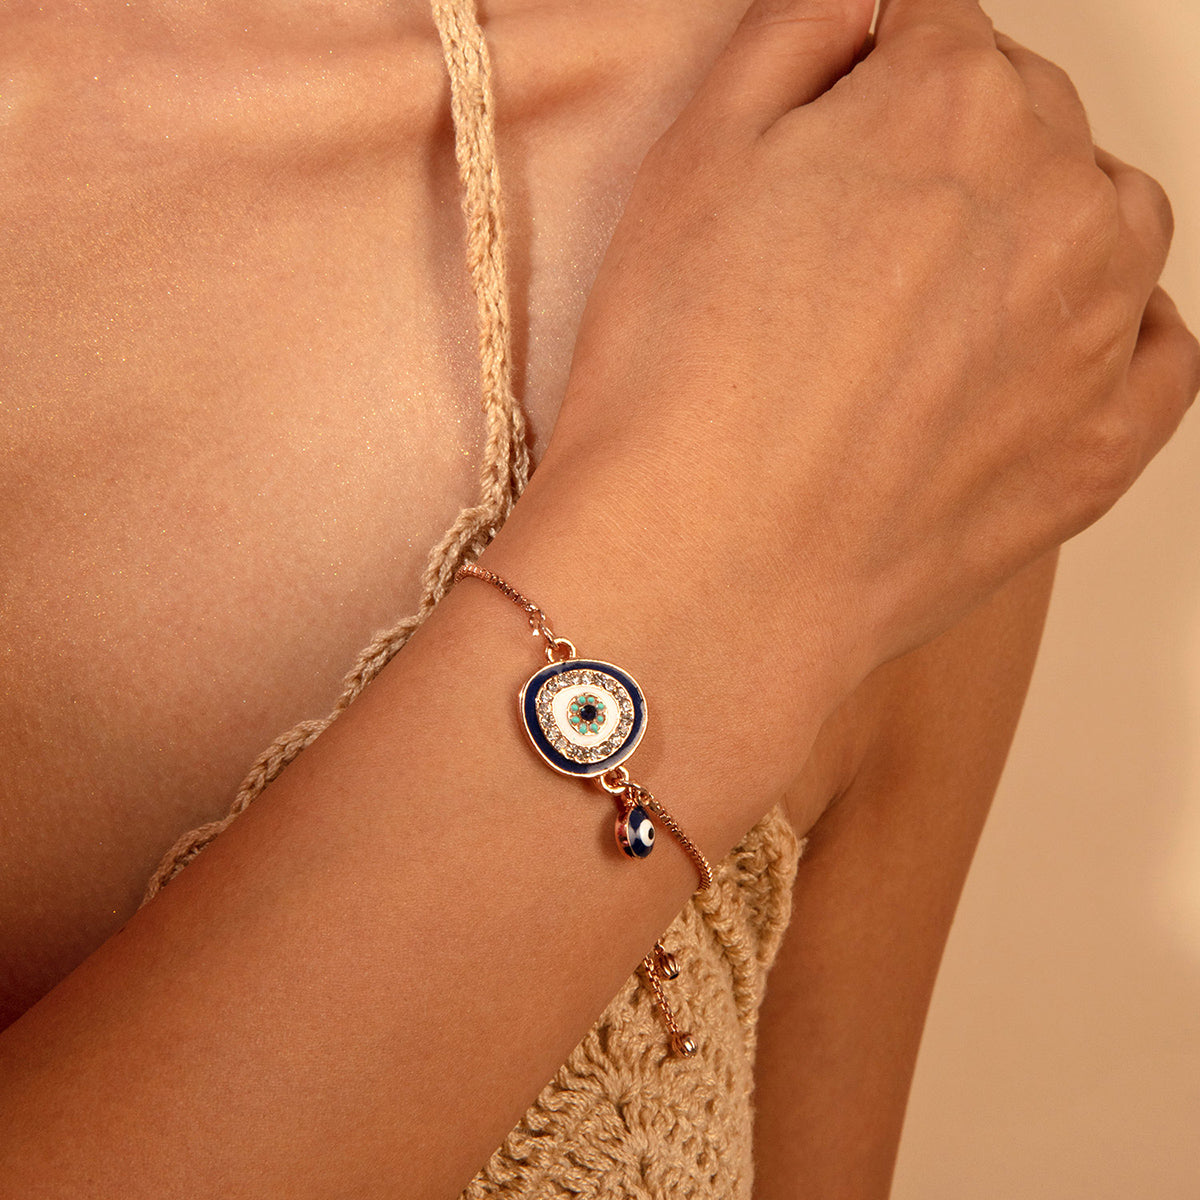 Blue Eye Bracelet Meaning  10 Benefits Of Evil Eye Bracelet